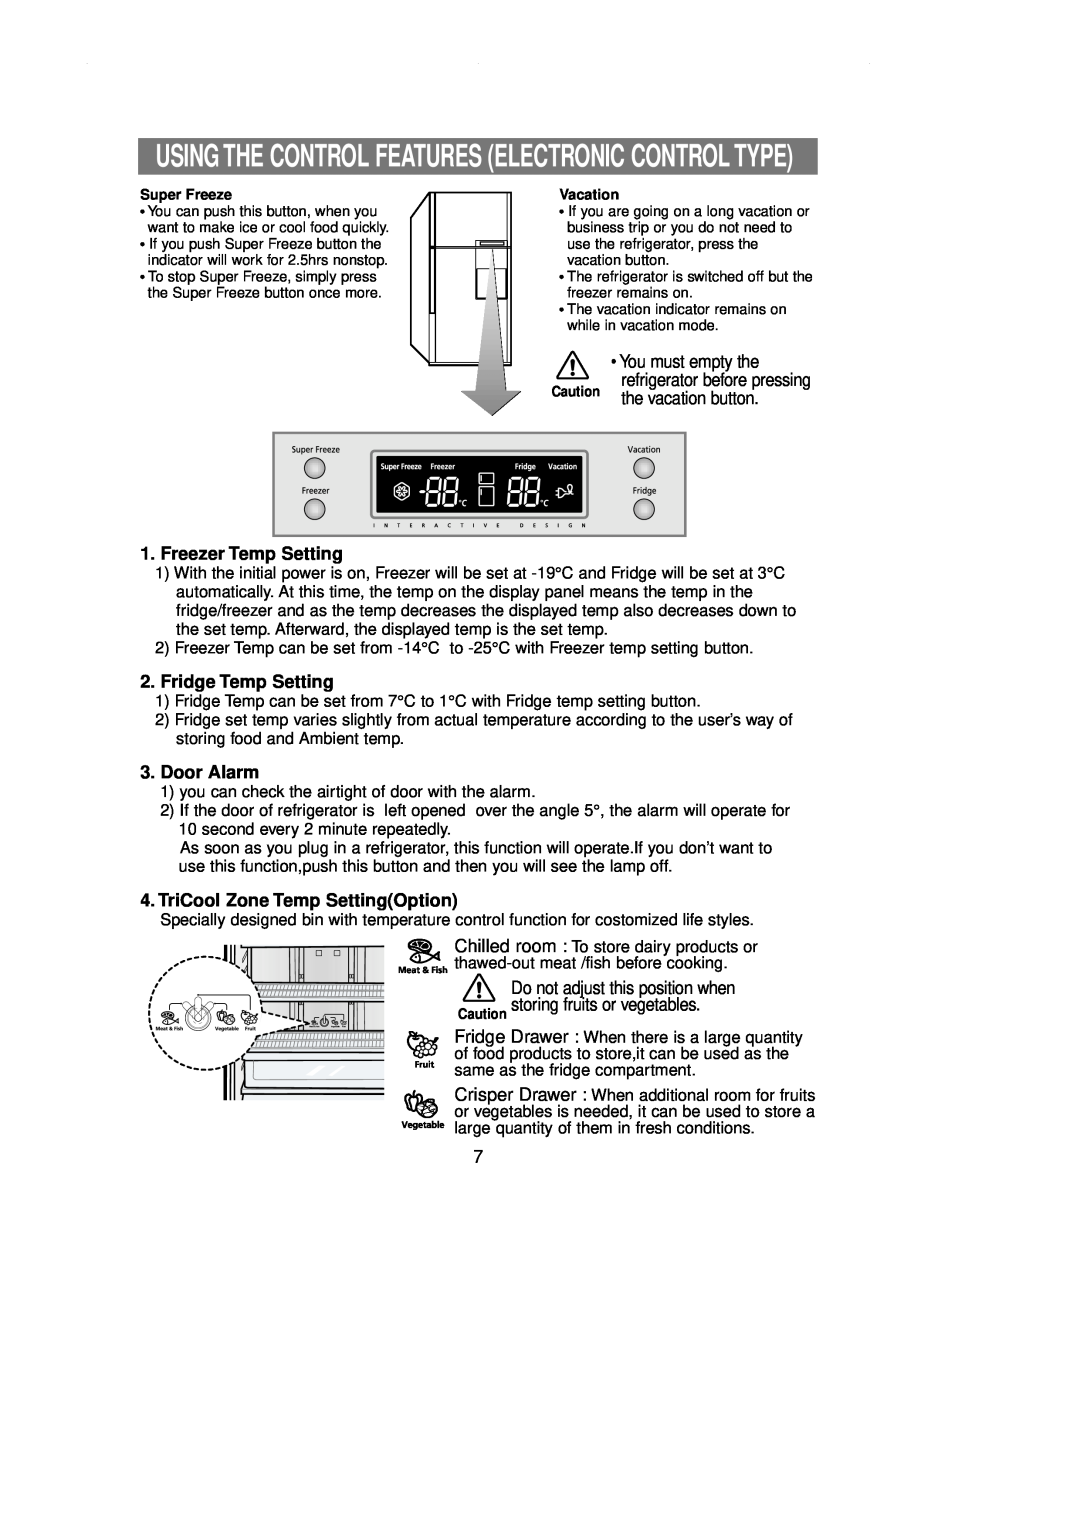 Samsung DA99-00743A owner manual Freezer Temp Setting, Fridge Temp Setting, Door Alarm, TriCool Zone Temp SettingOption 